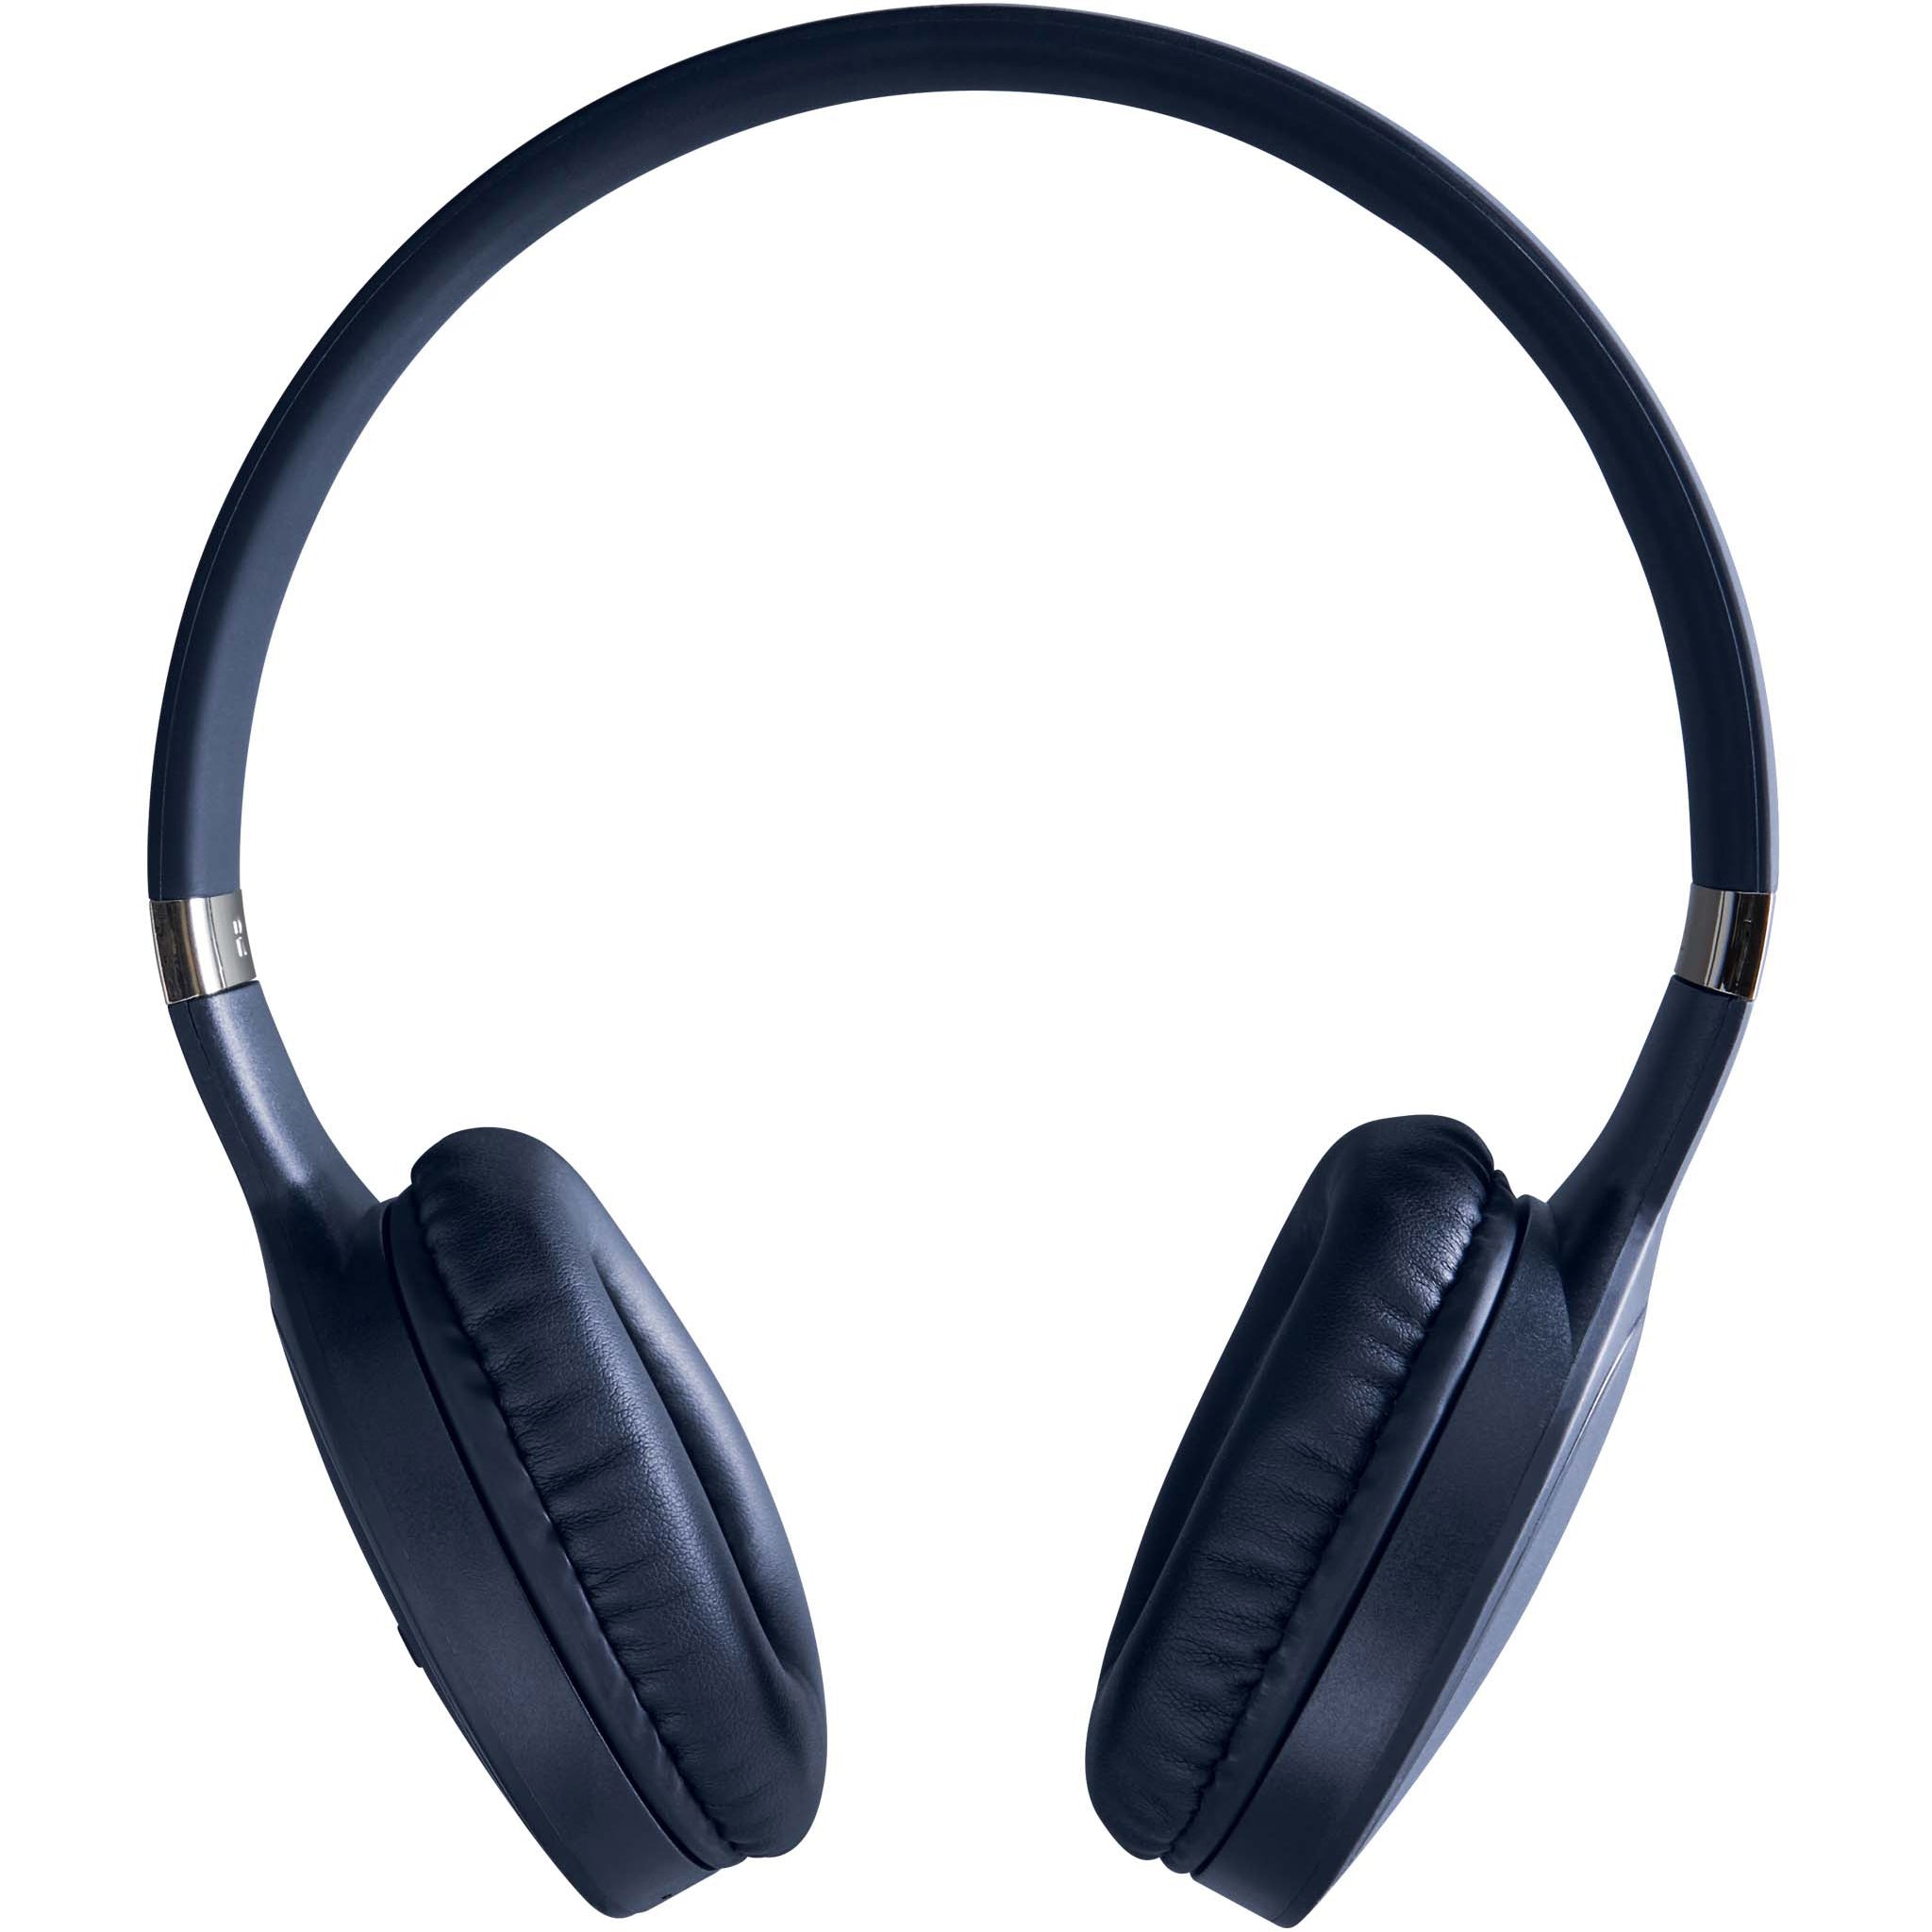 komodos bluetooth headphones comfortable